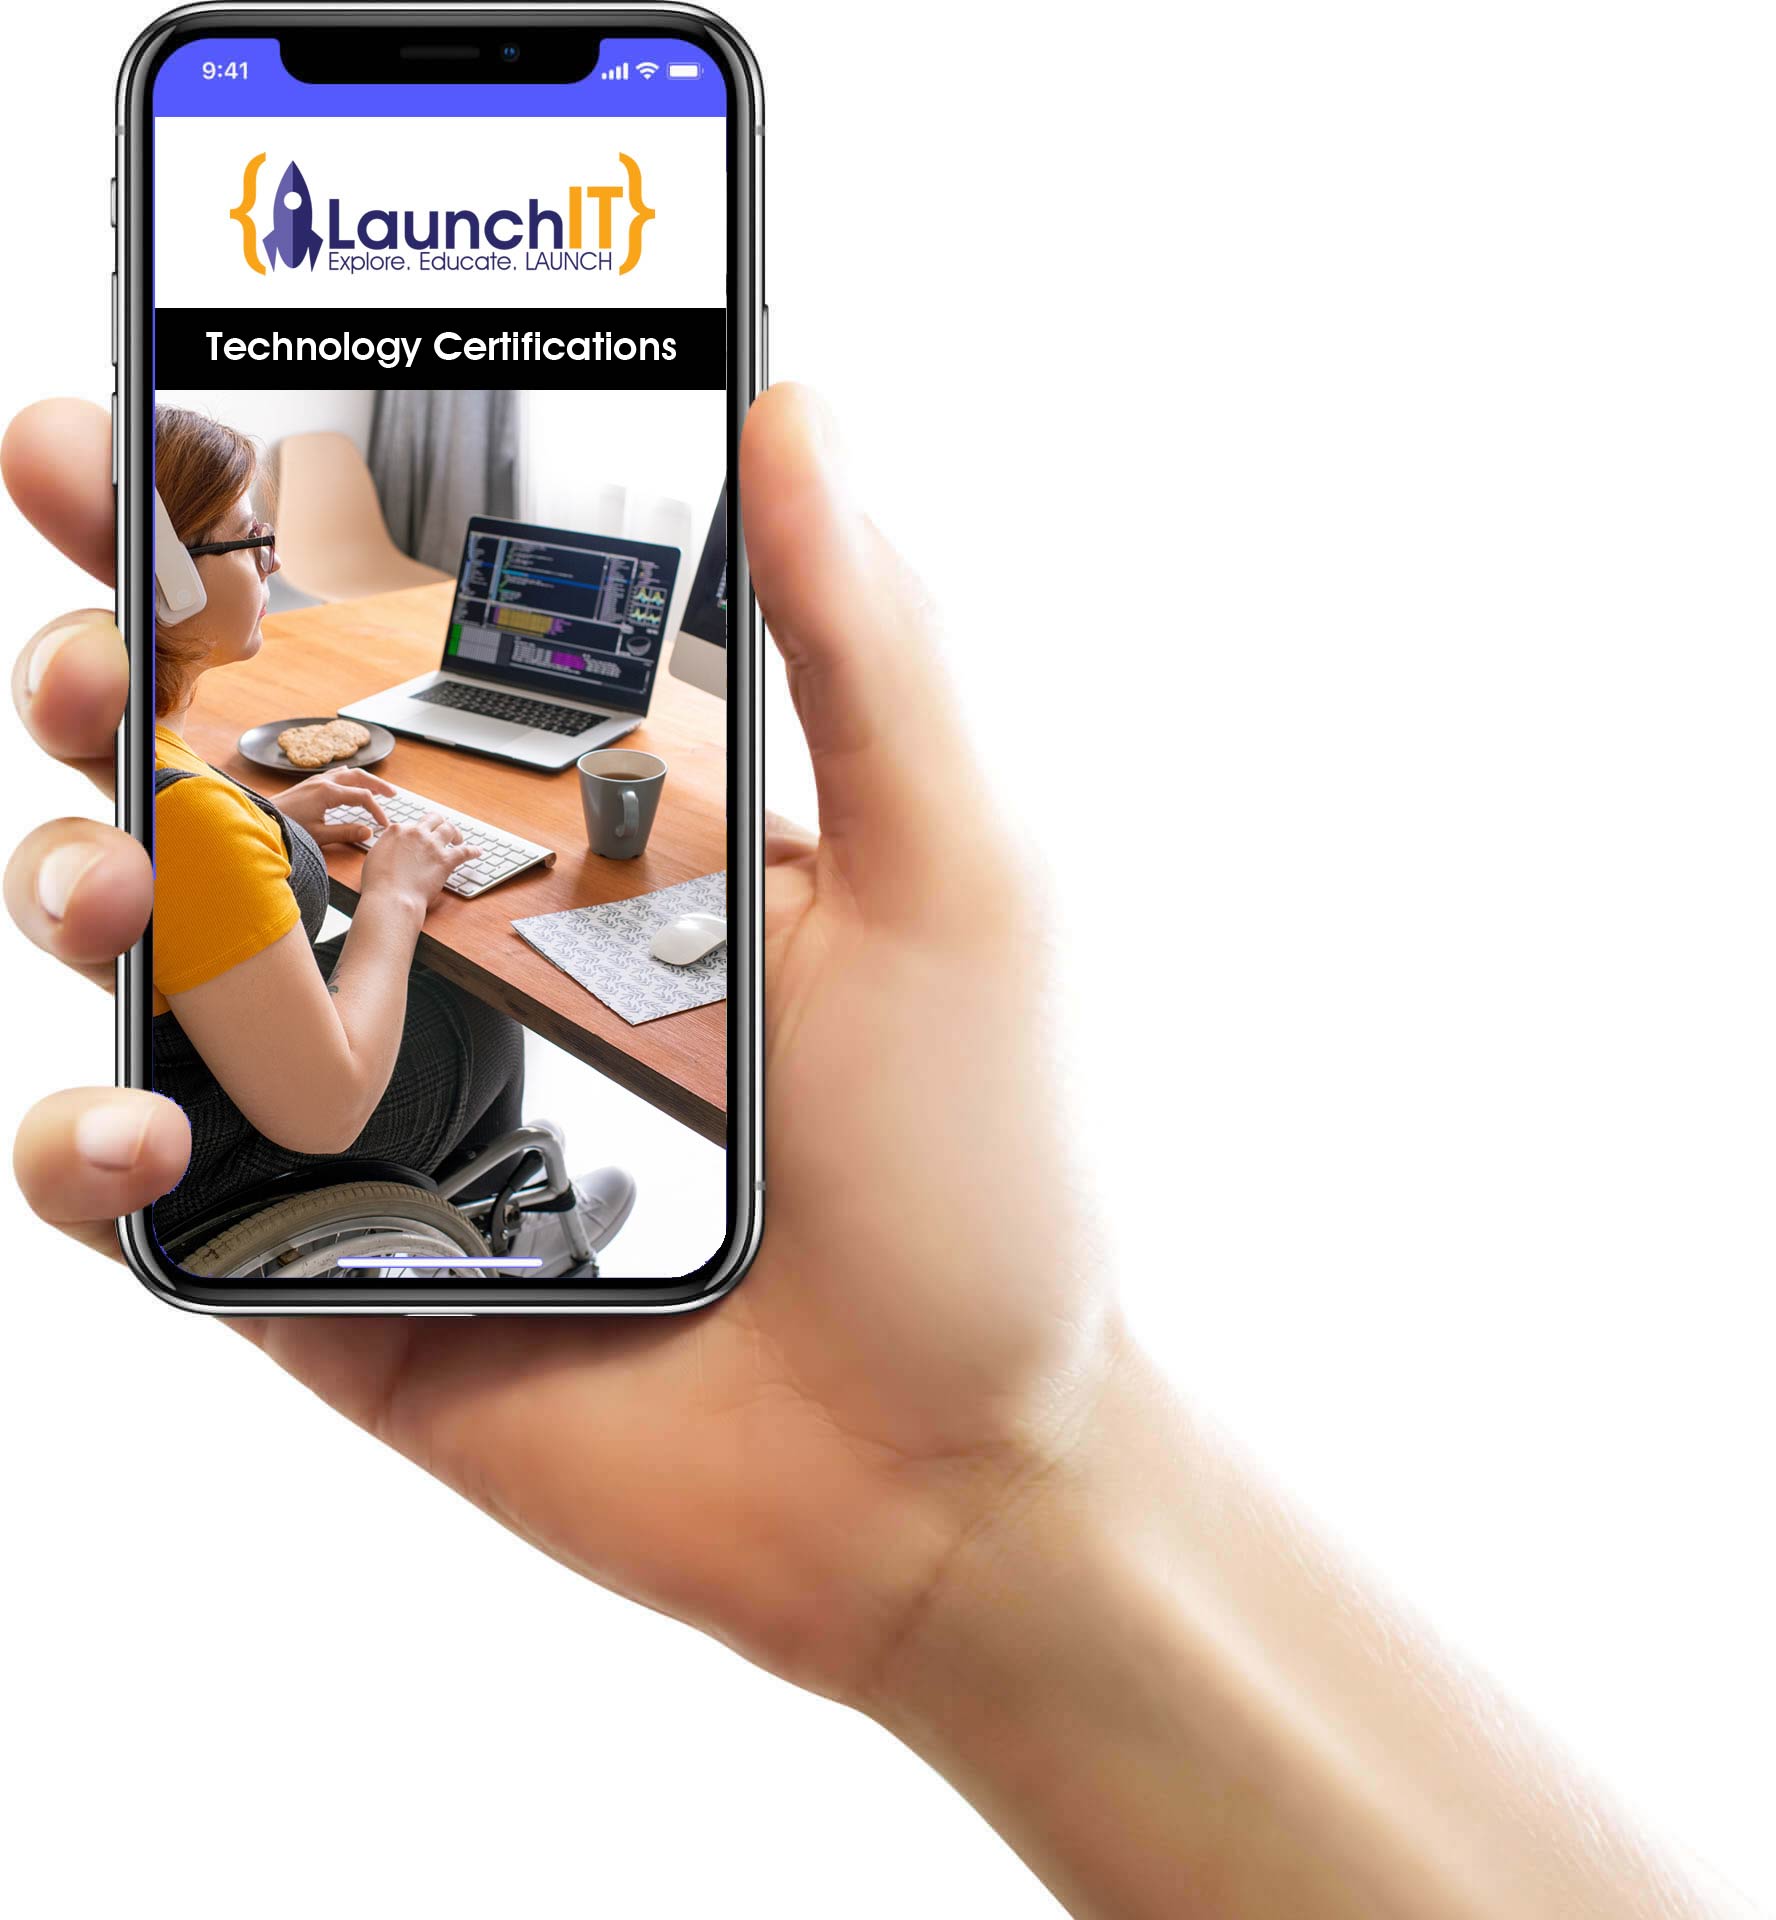 LaunchIT Phone, Technology Certifications